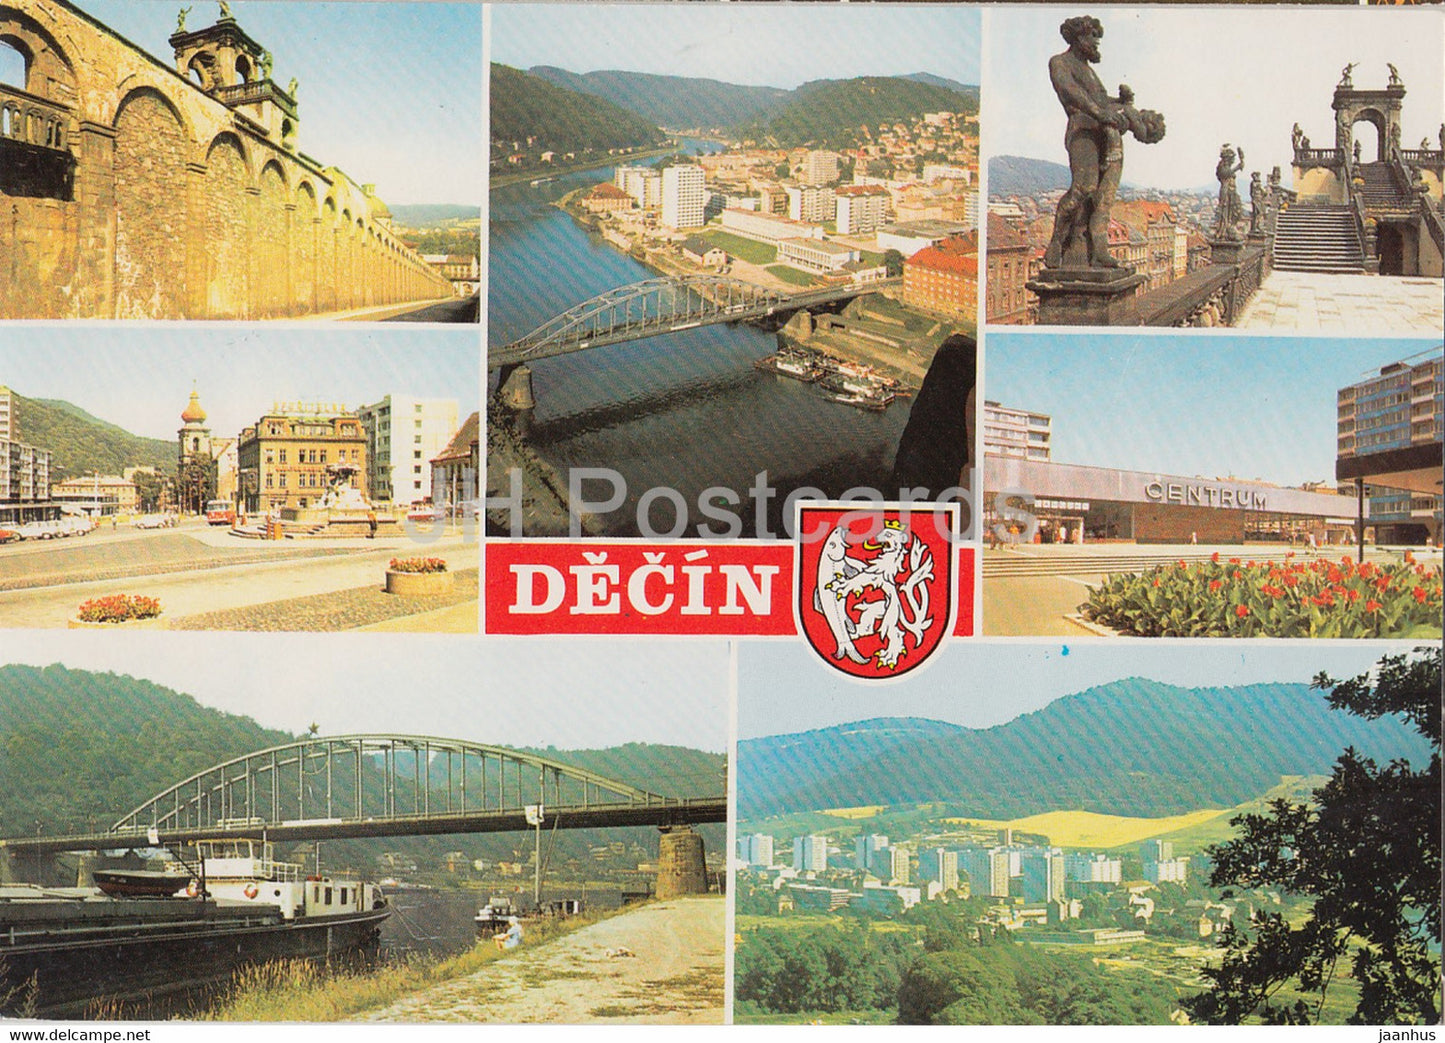 Decin - castle - Lenin square - general view - shop - bridge - multiview - 1975 - Czechoslovakia - Slovakia - used - JH Postcards